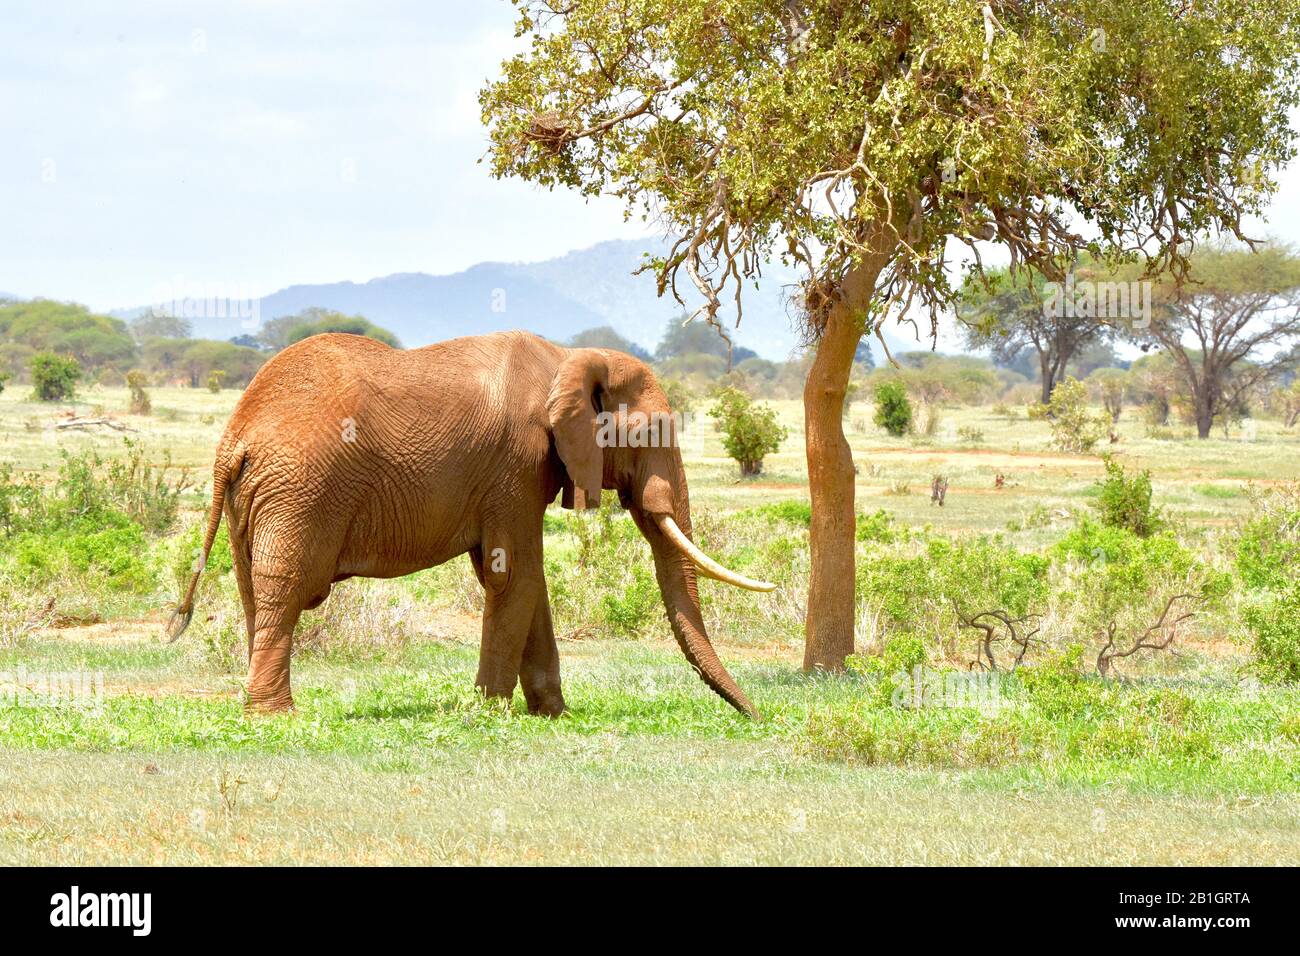 Big bull elephant (Loxodonta africana) feeding in a dry bush landscape. Copy space. Stock Photo